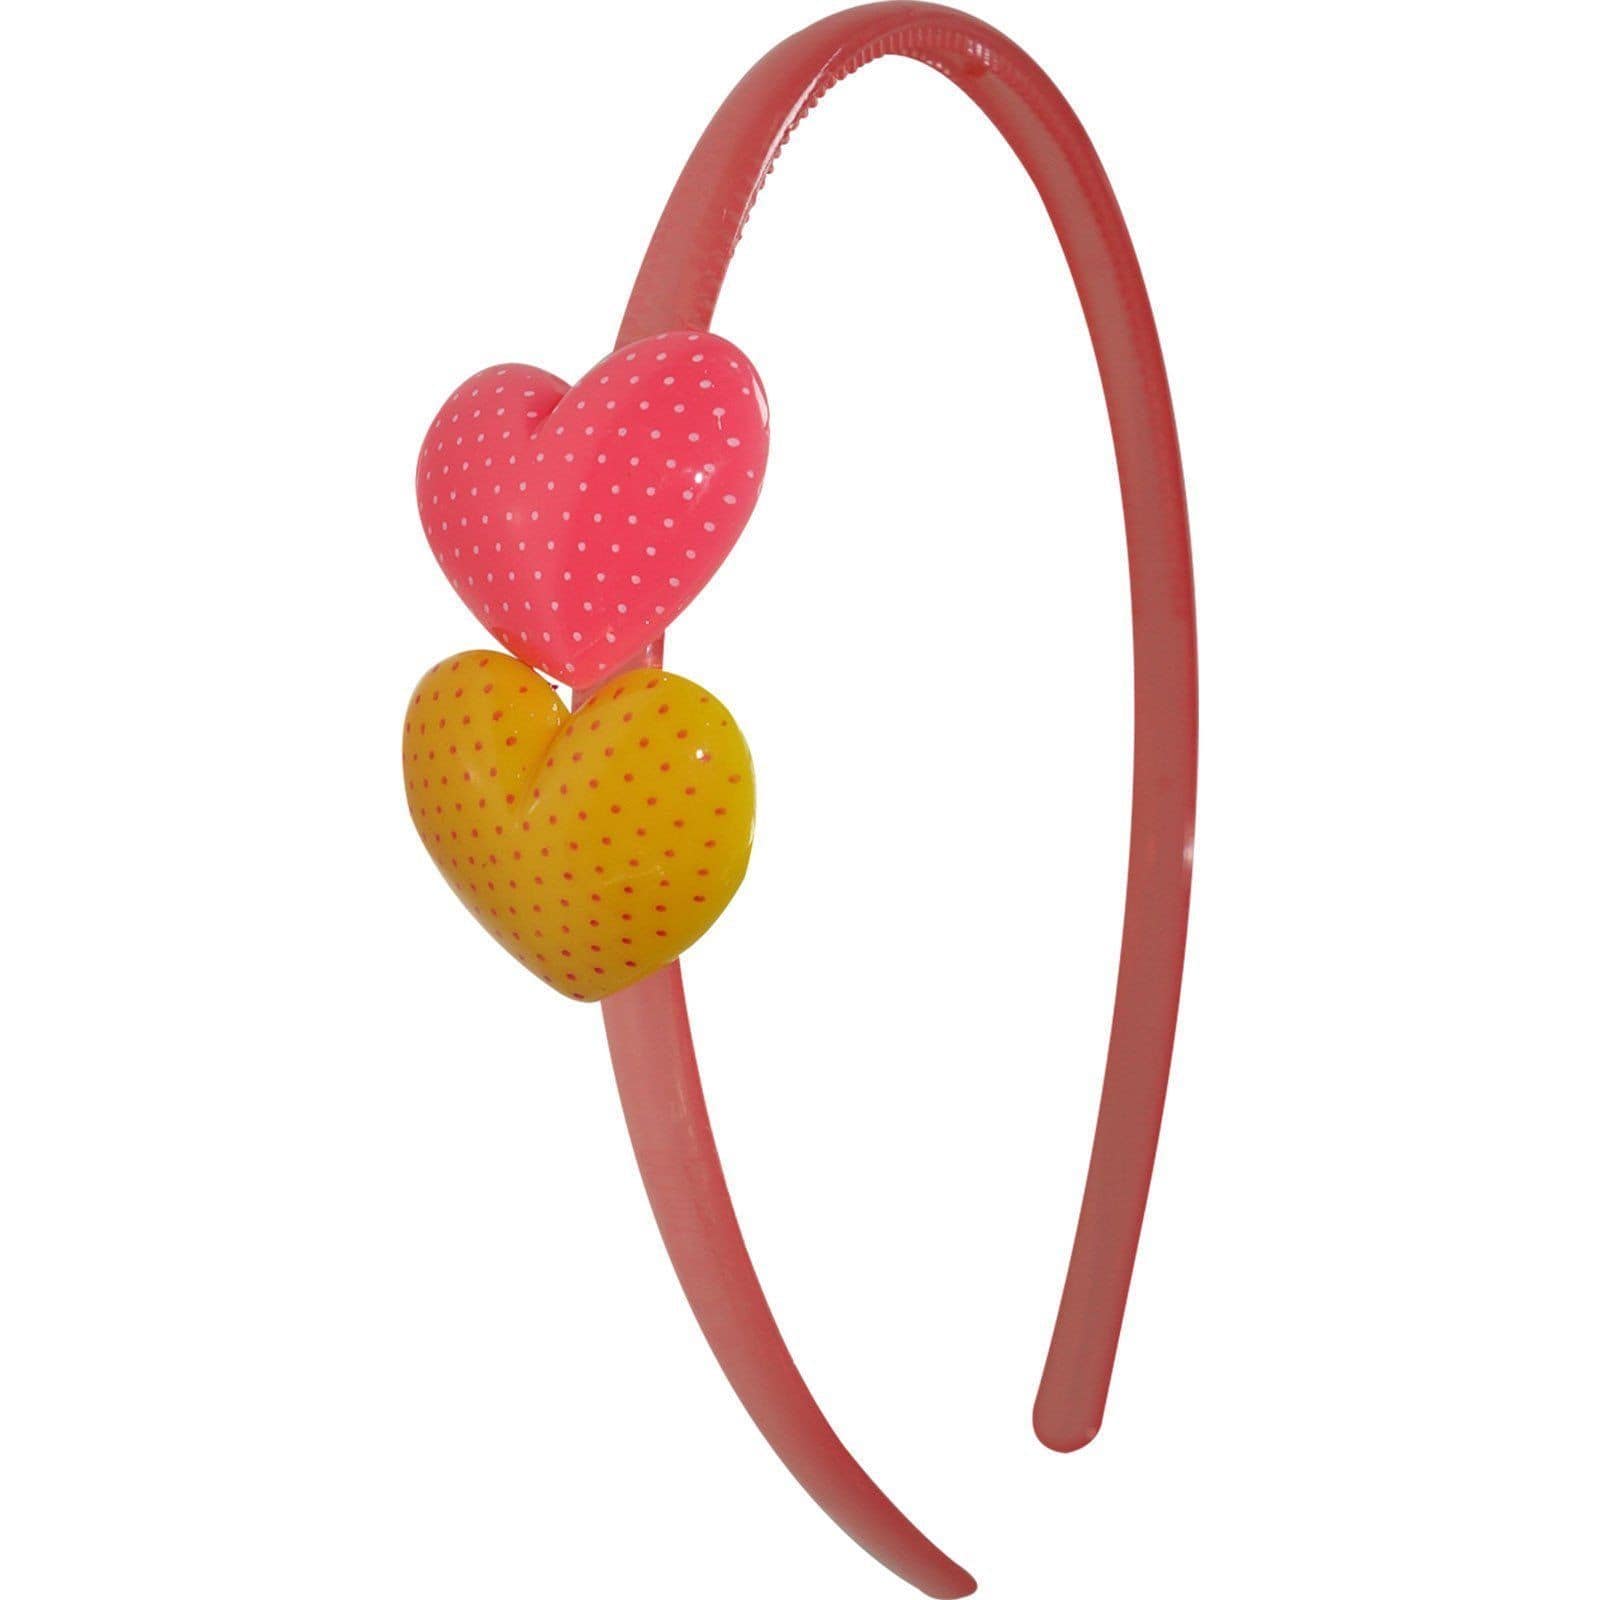 2 X Pink Orange Love Heart Red Hairbands Headbands Hair Bands Girls Accessories